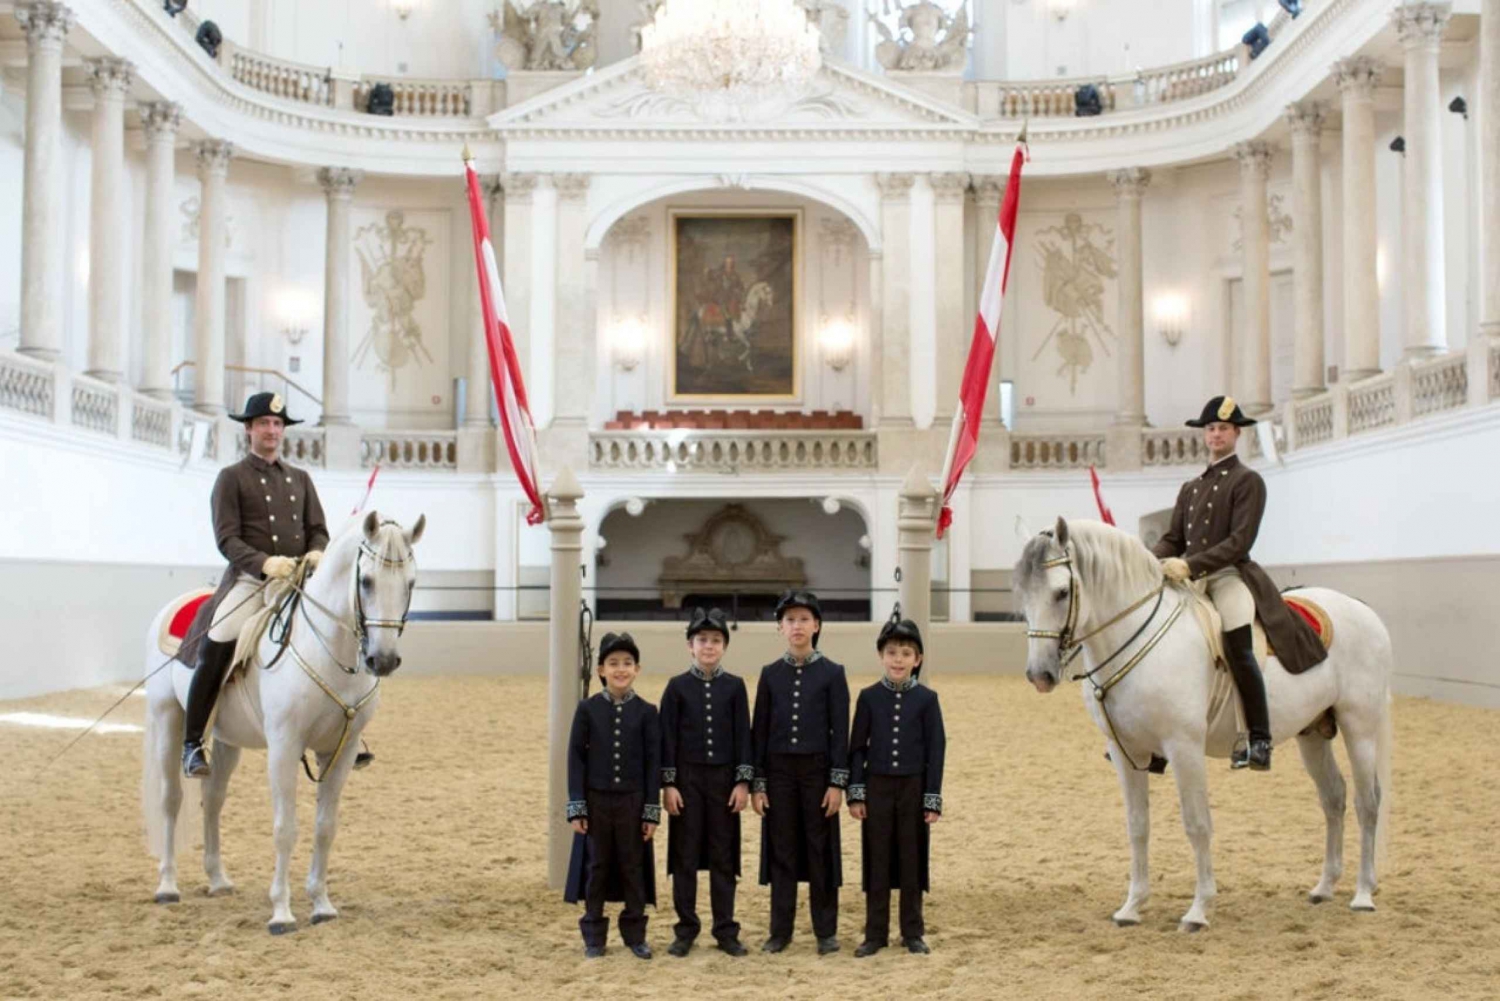 Vienna: The Spanish Riding School and the Vienna Boys' Choir